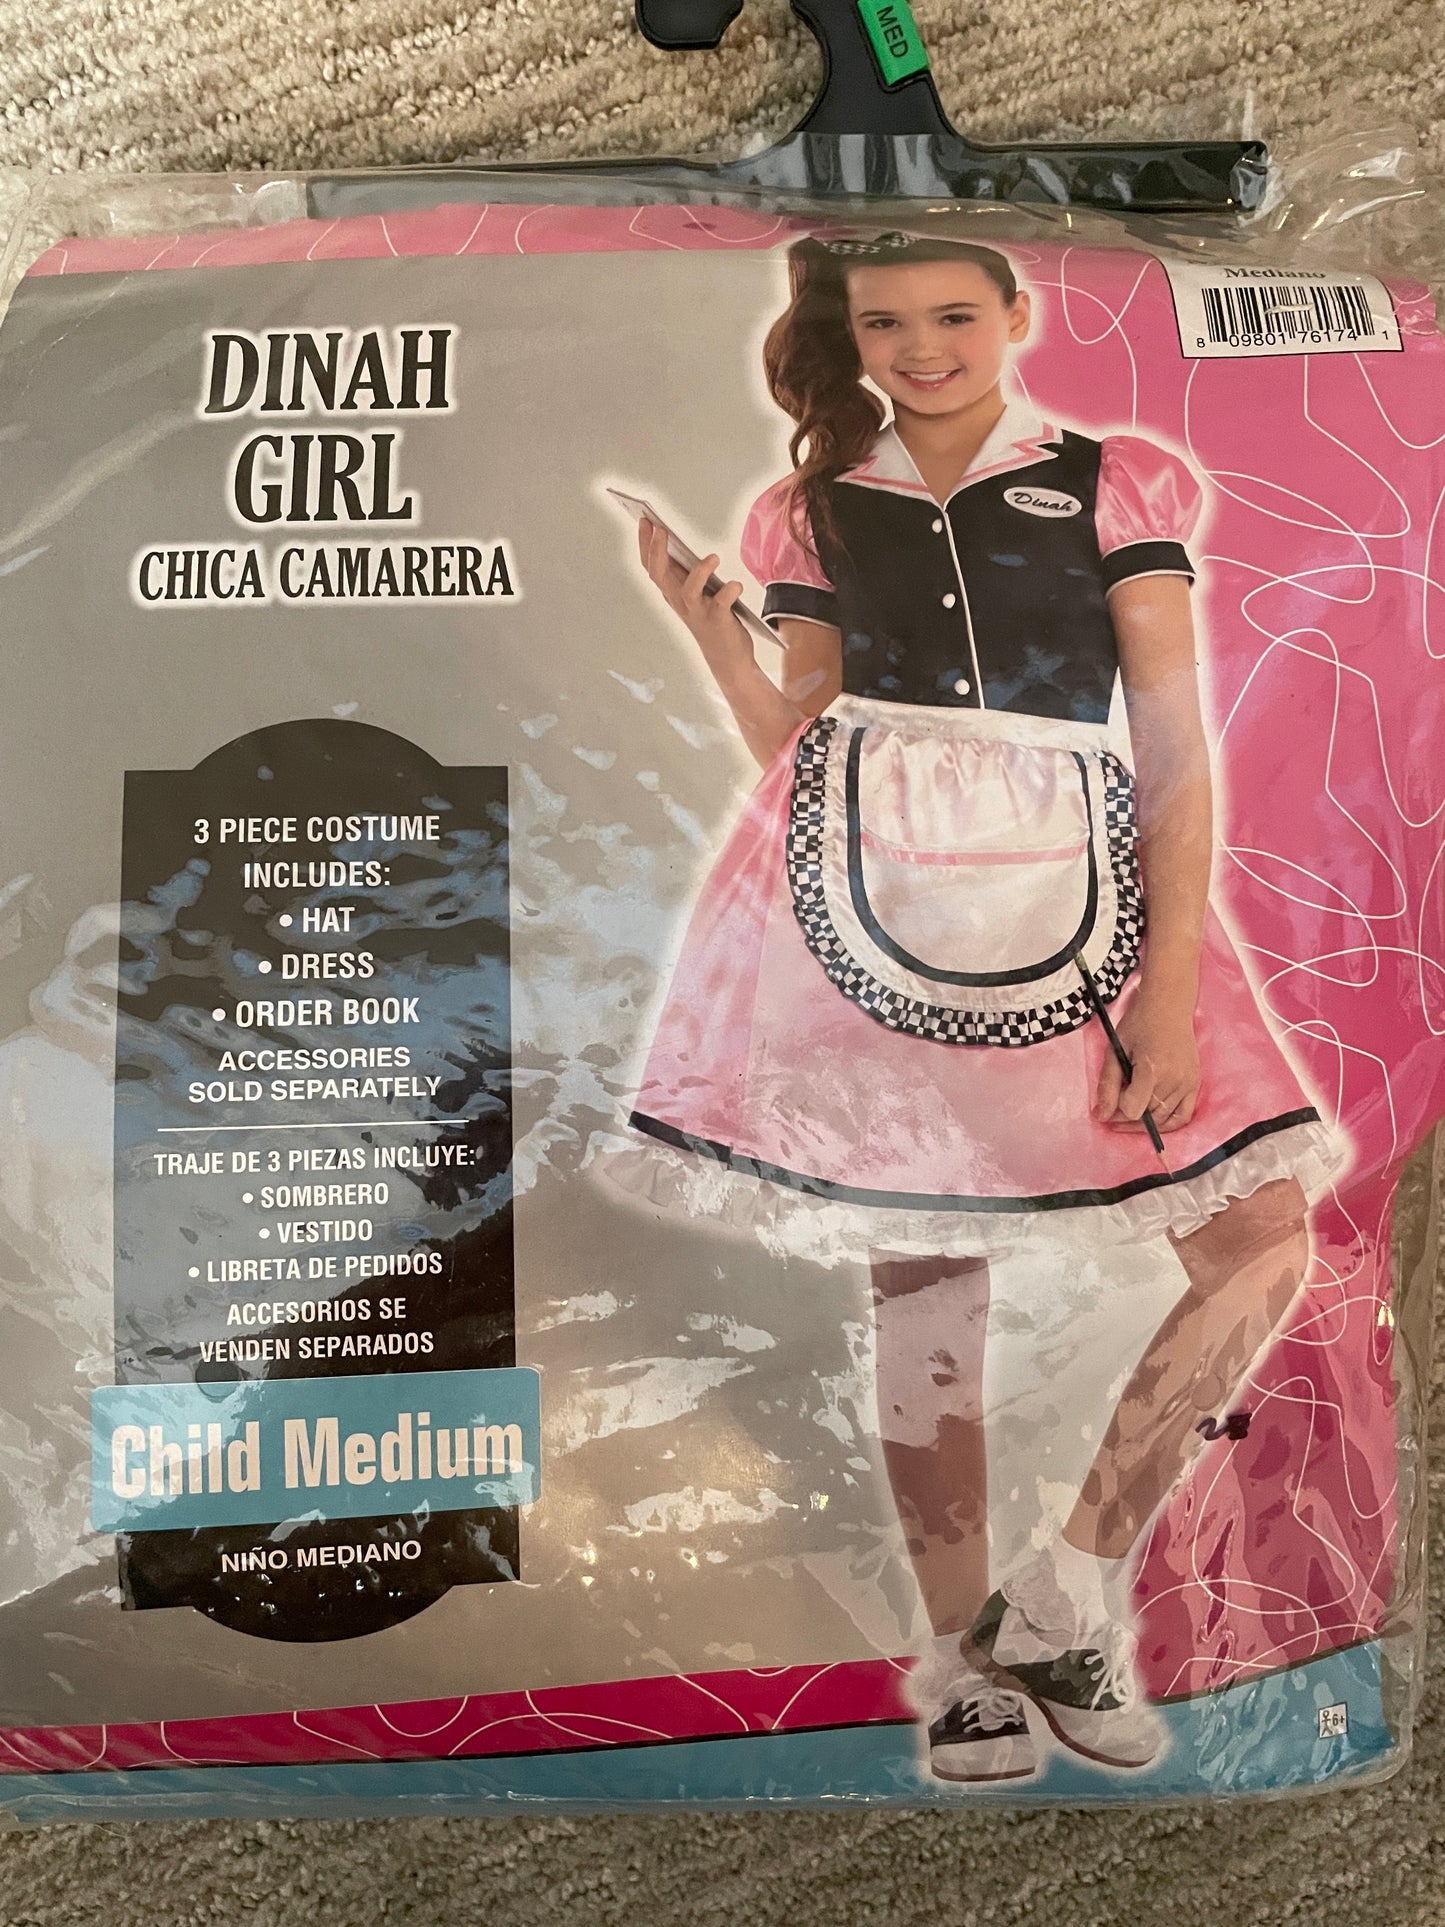 Diner Girl "Dinah"